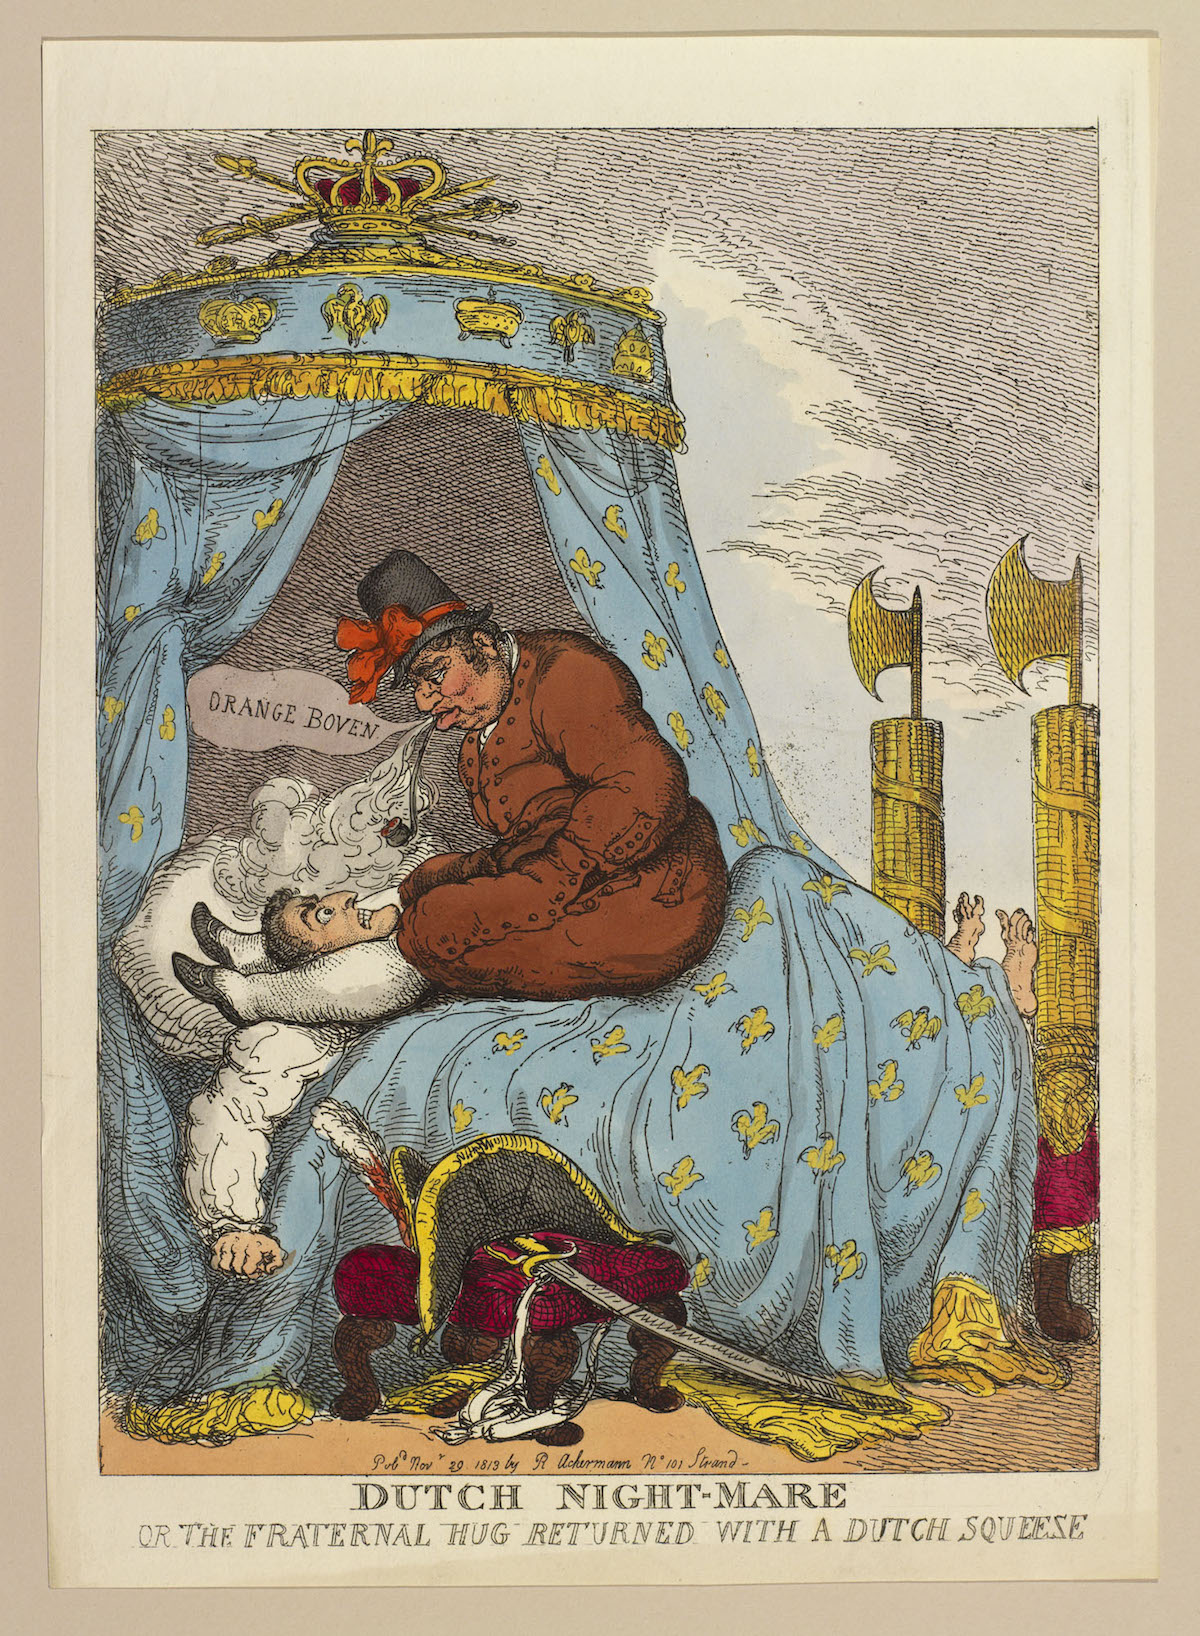 Thomas Rowlandson, caricatures, 18th century